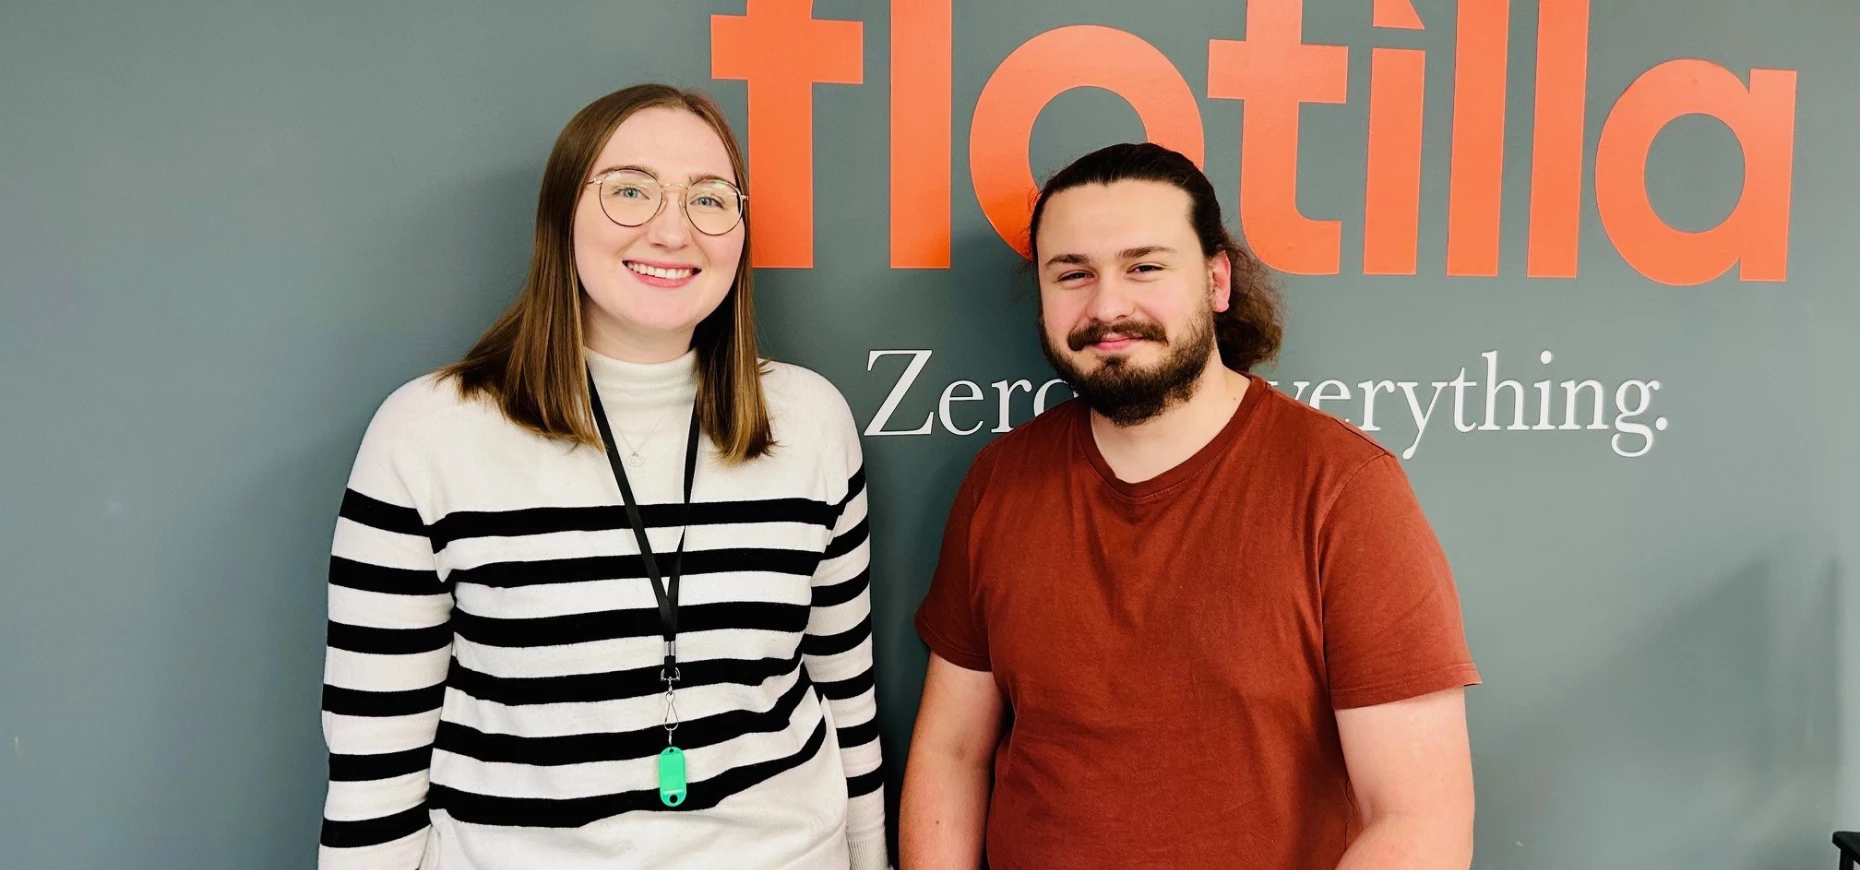 Flotilla’s new recruits - Charlotte Hallowell, carbon accountant, and Jason Talman, full stack developer.